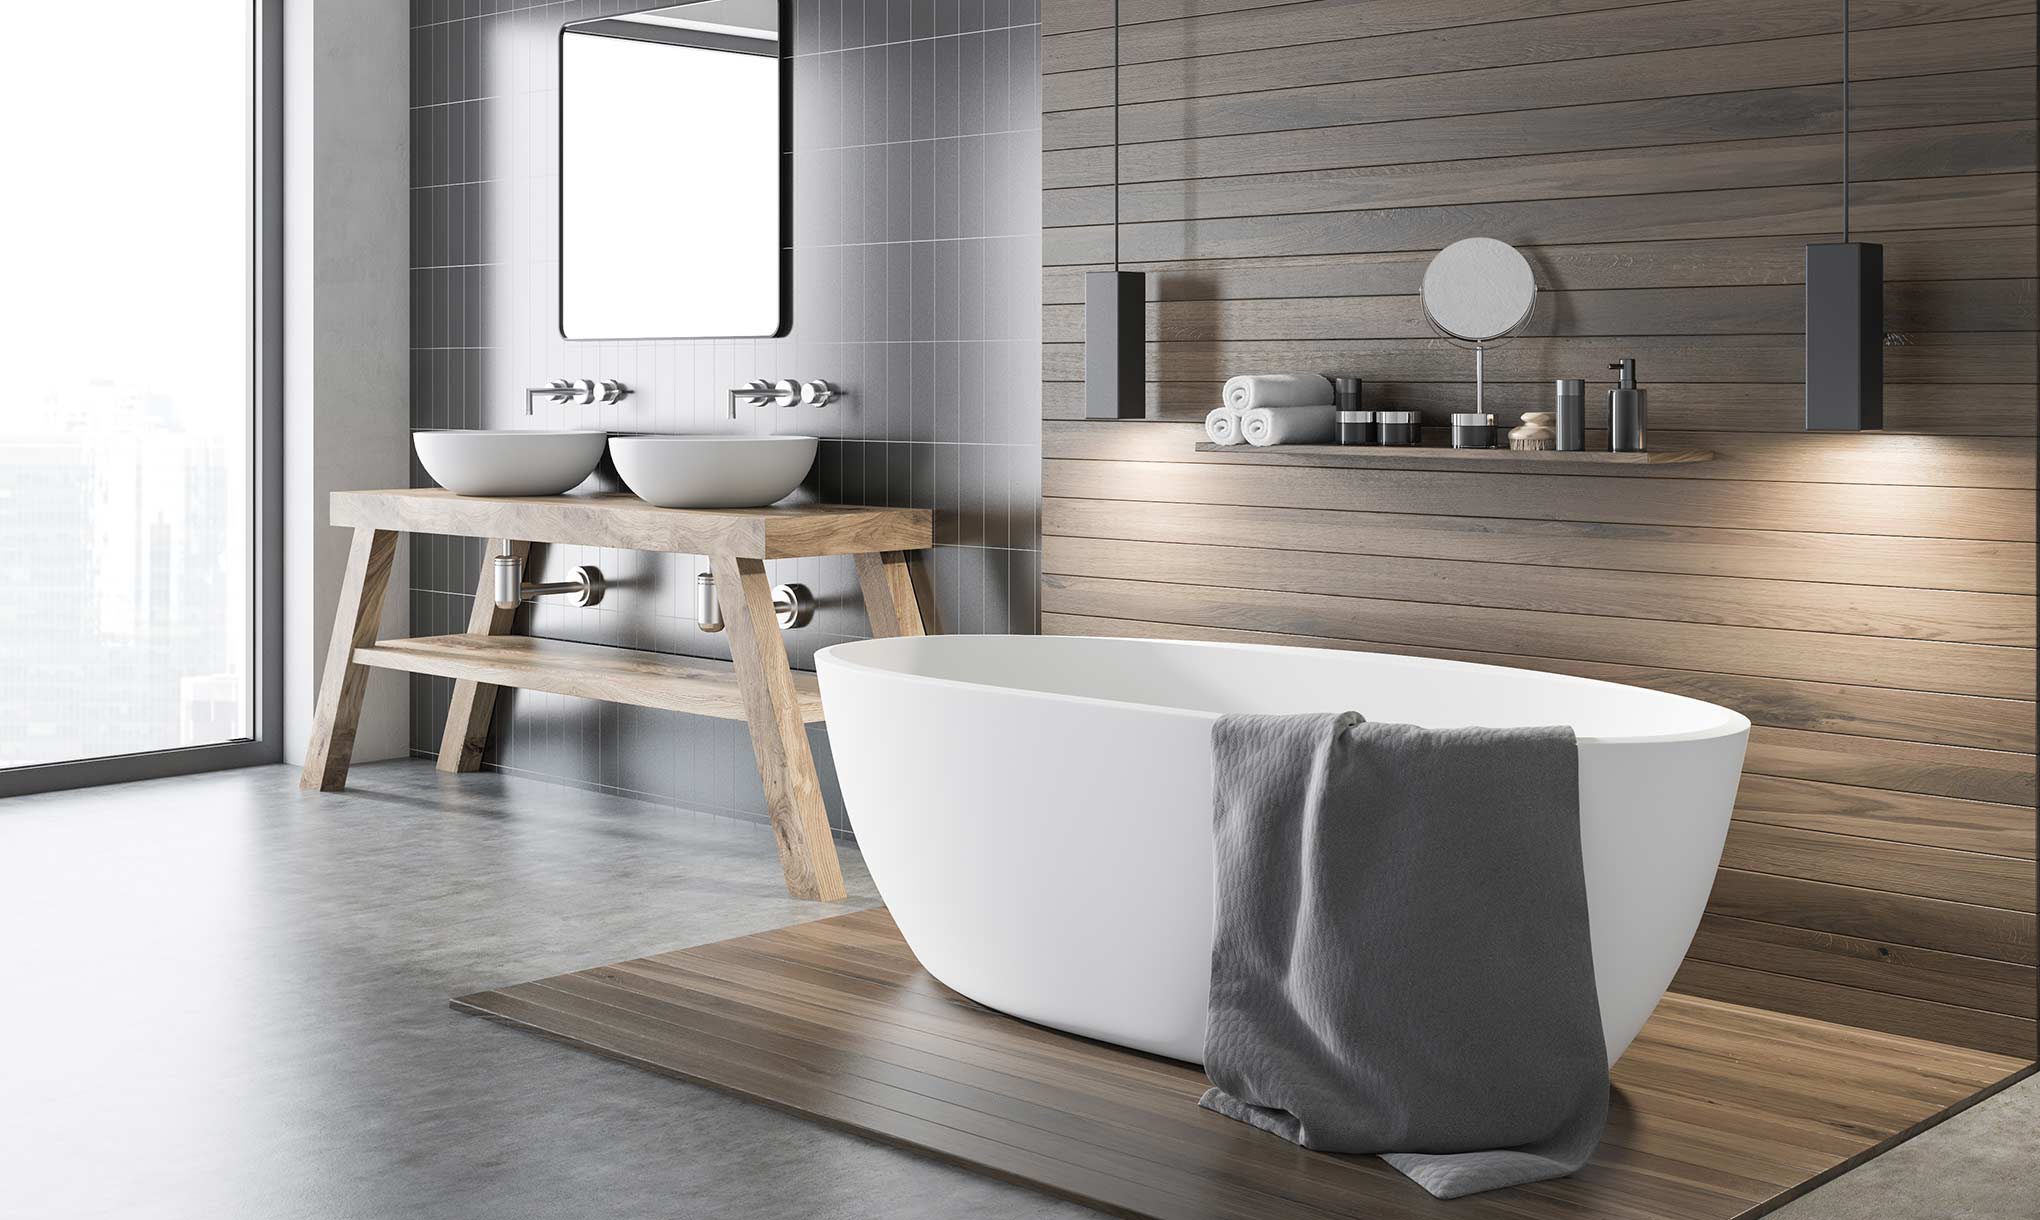 Salle de bain moderne, bois, pièce lumineuse, baignoire blanche